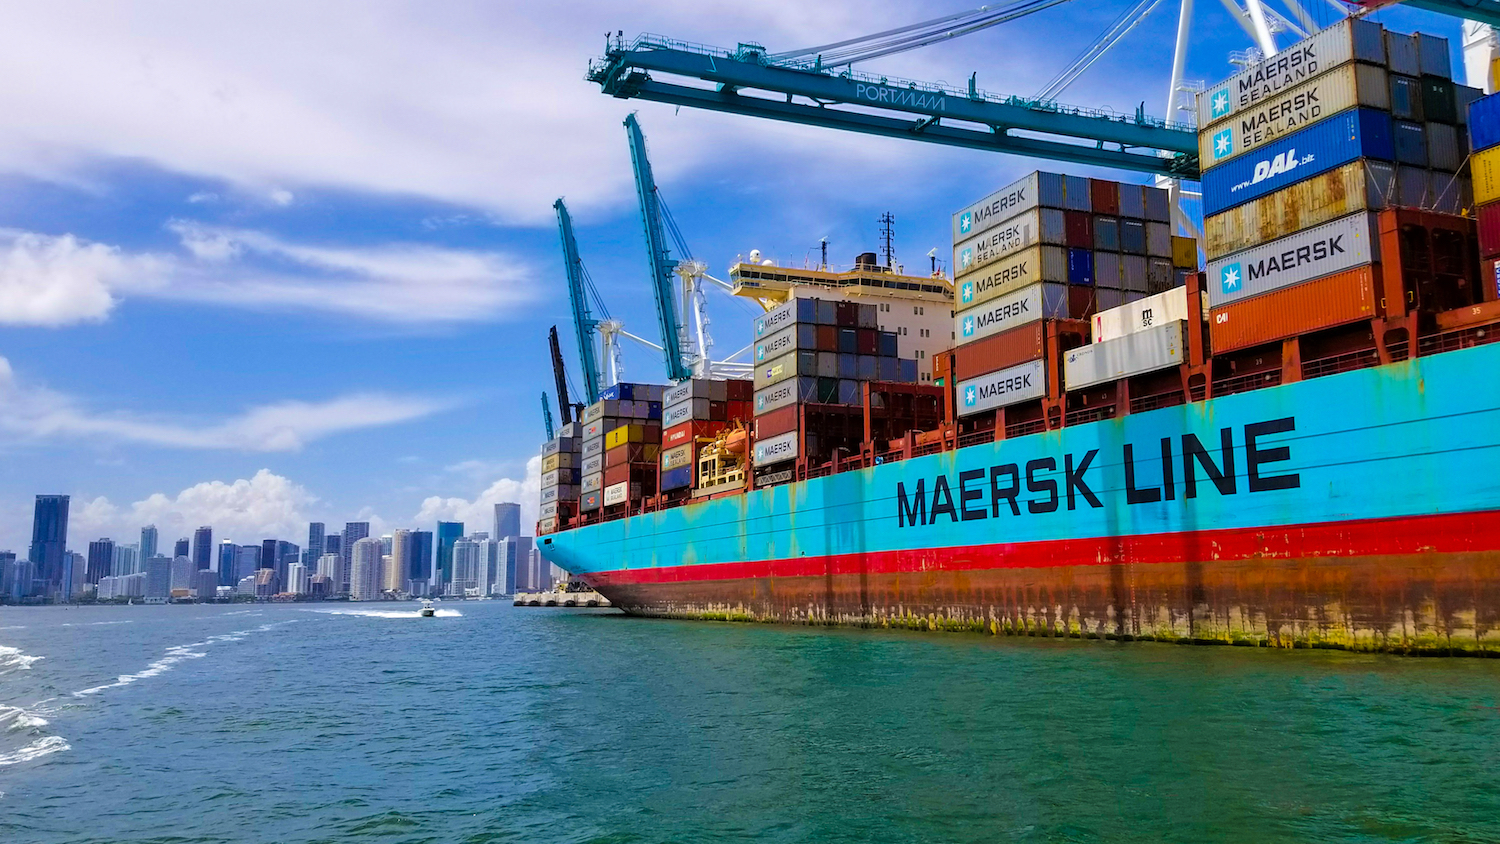 Oman’s-largest-port-joins-blockchain-shipping-platform-tradelens